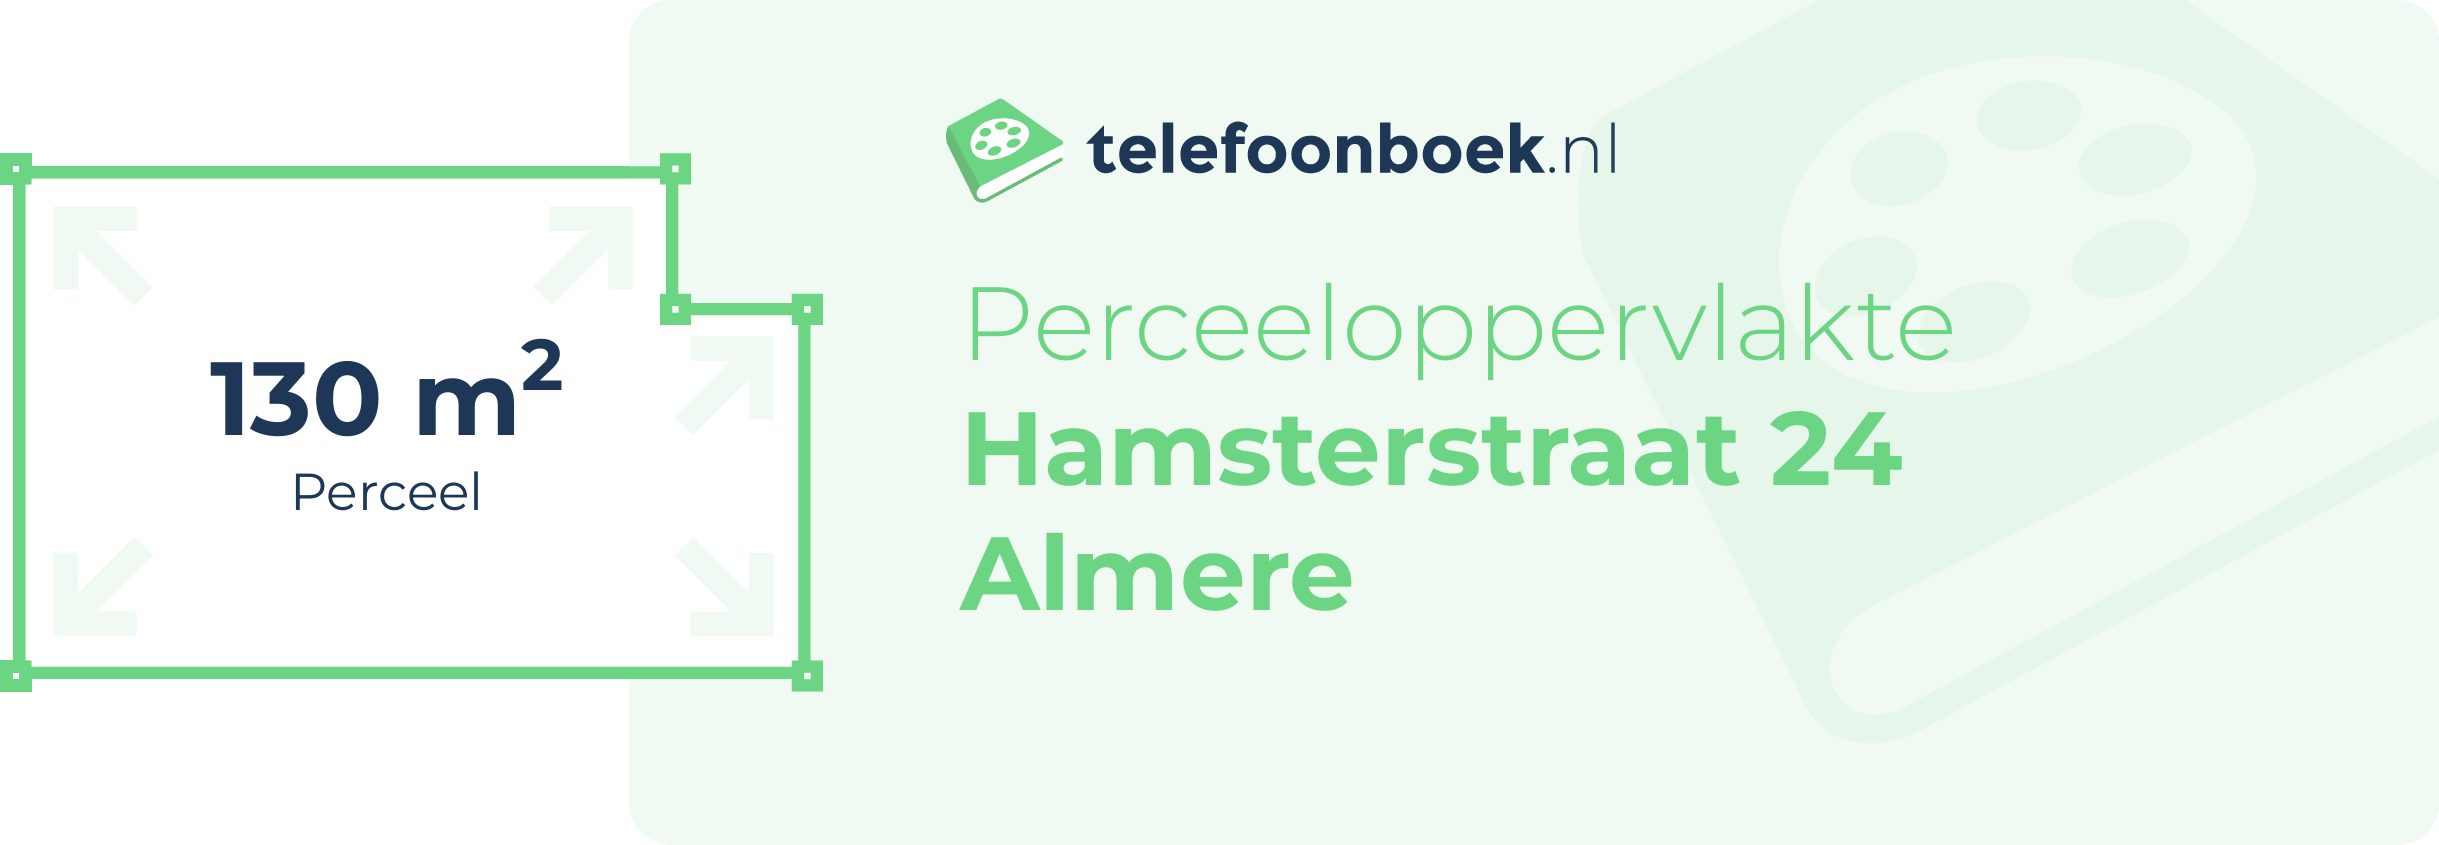 Perceeloppervlakte Hamsterstraat 24 Almere